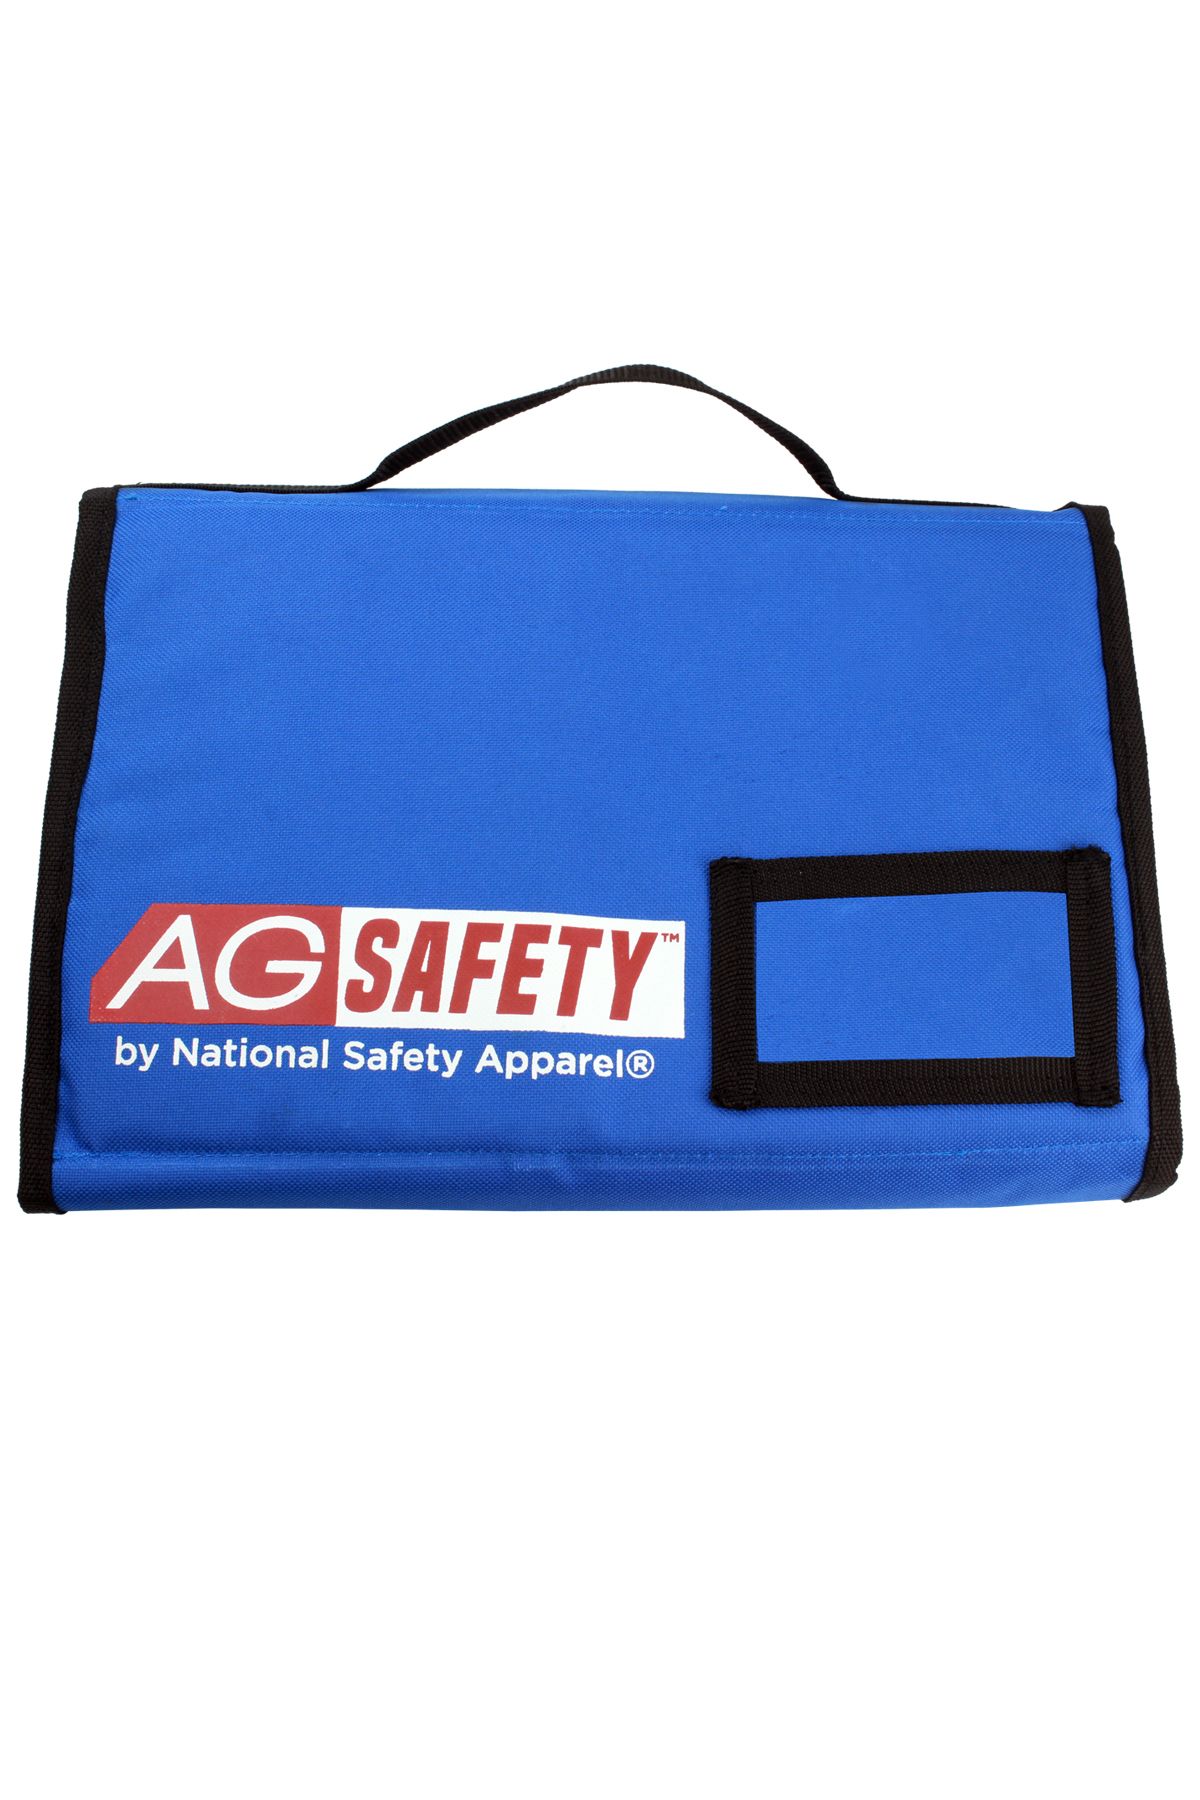 AG Safety Tool Kit 9PC Premium (each)